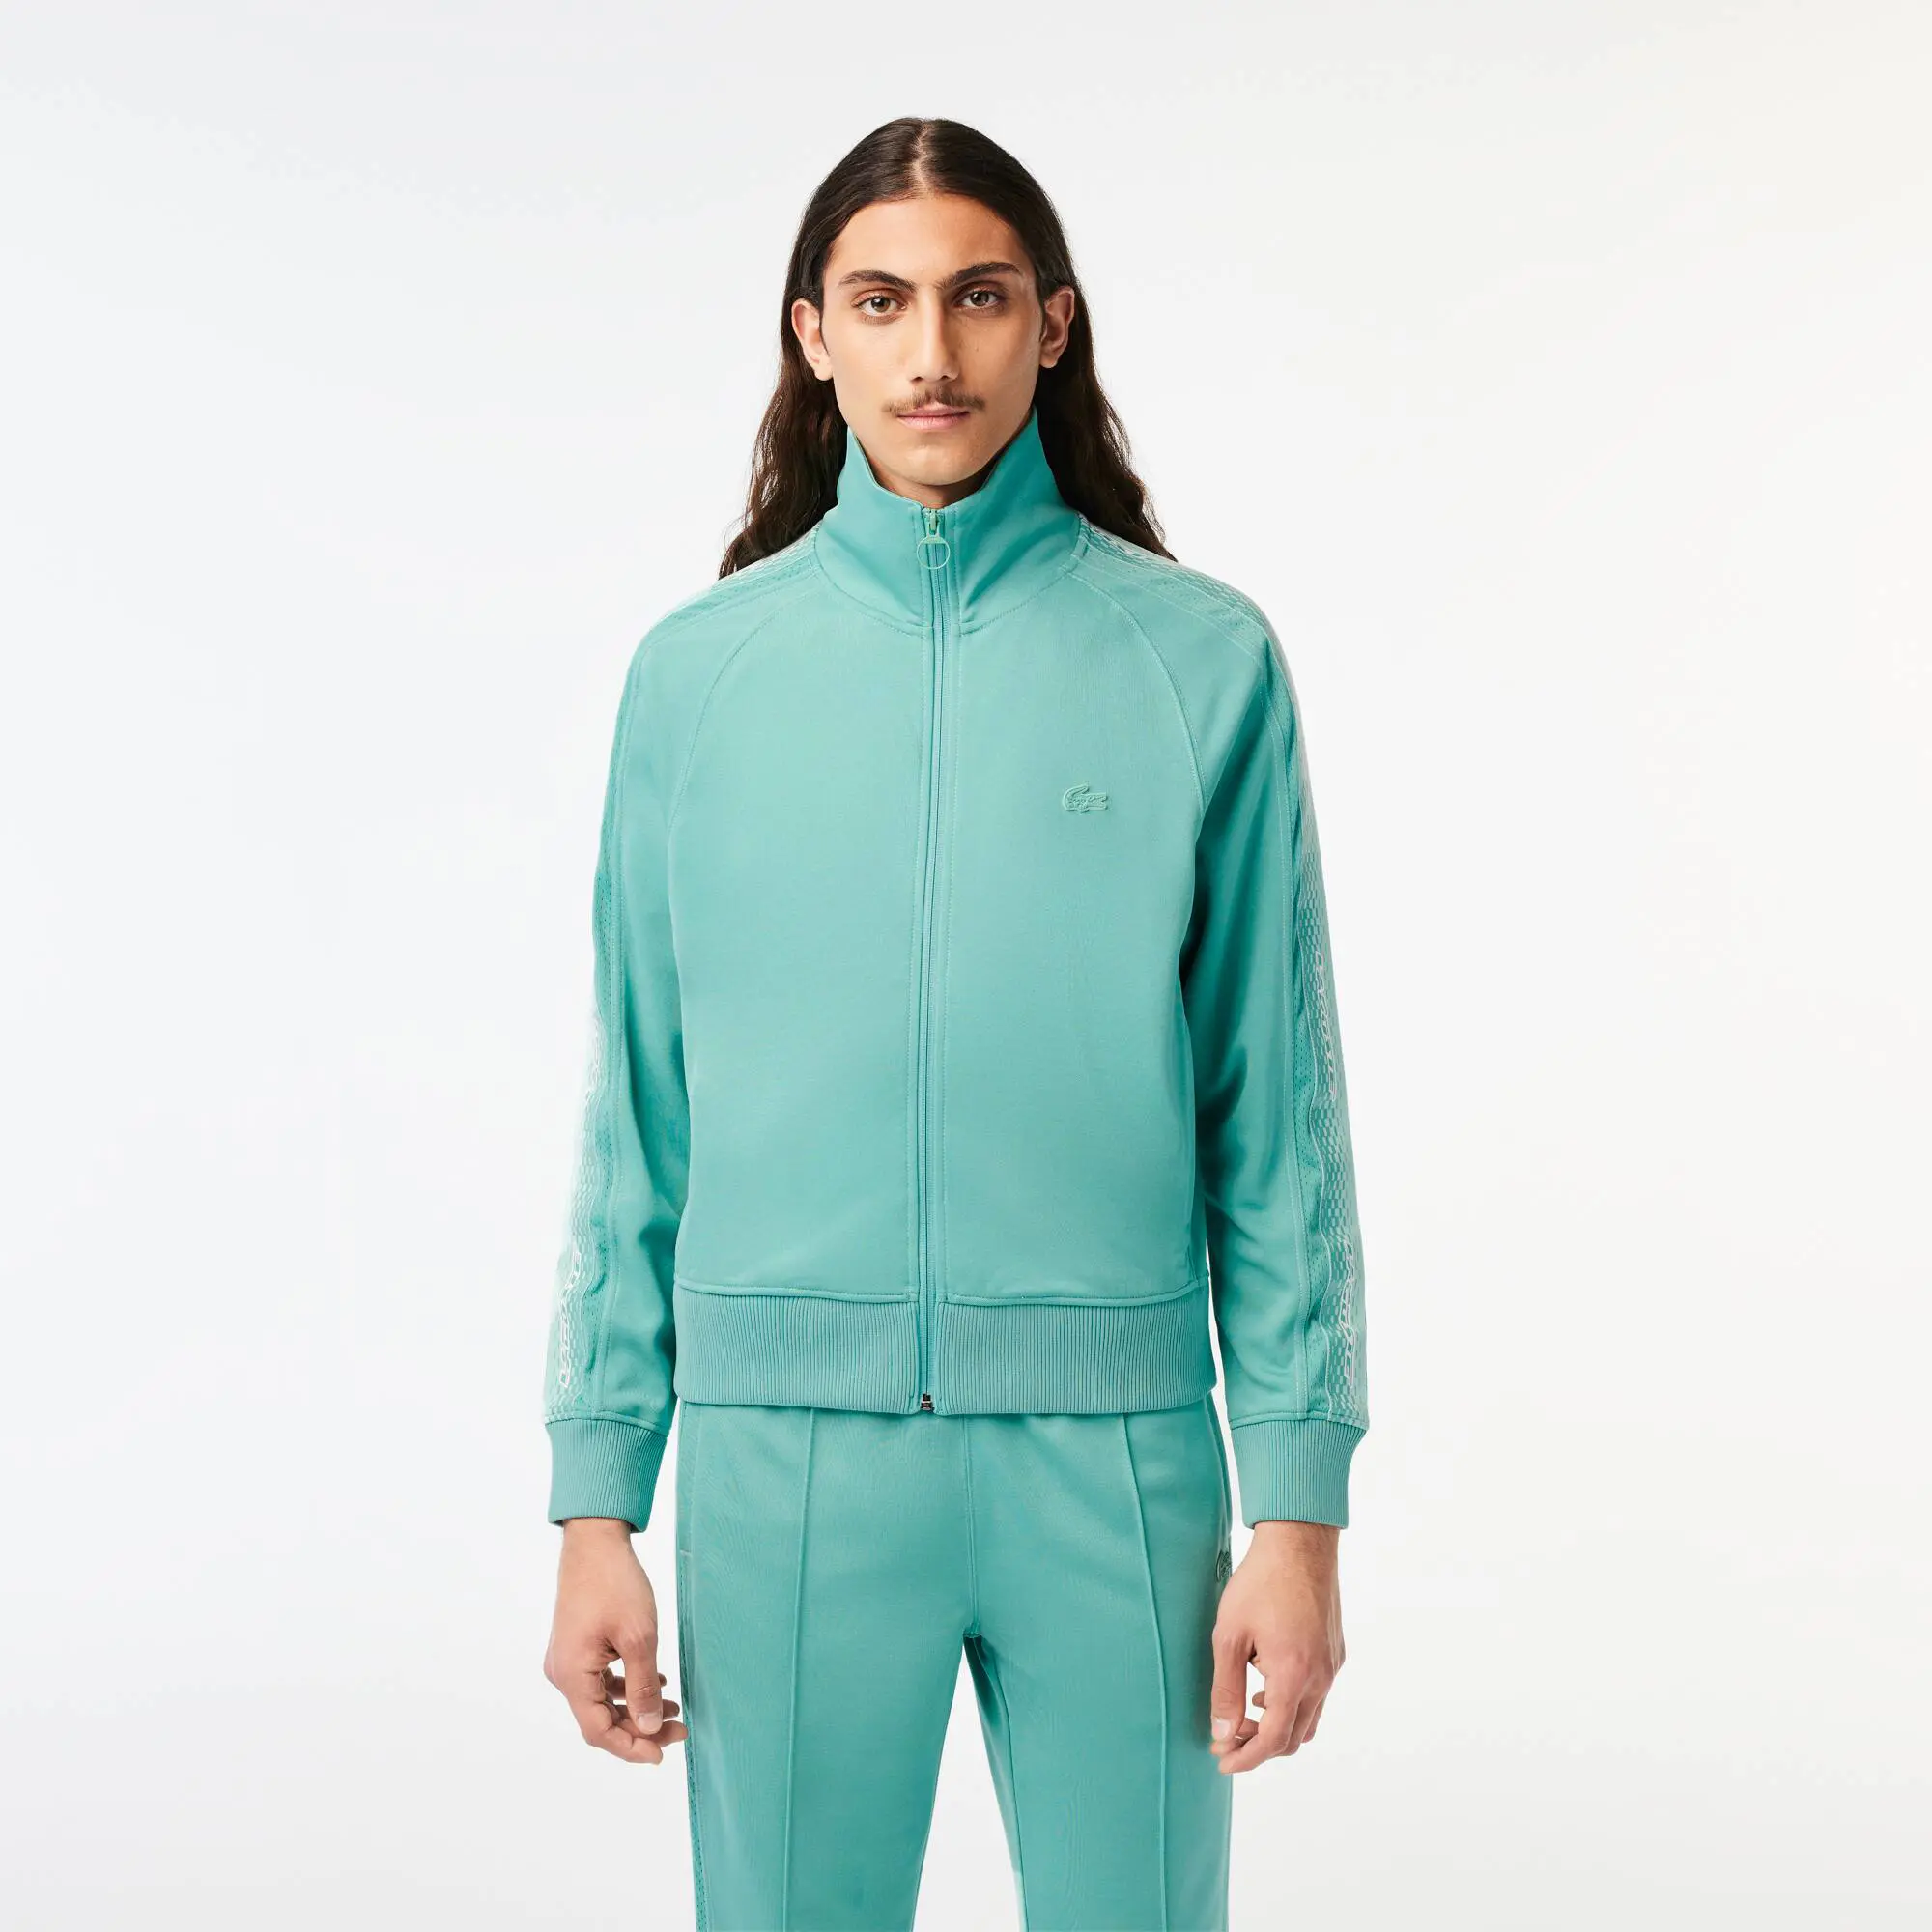 Lacoste Men’s Lacoste Regular Fit Zipped Piqué Sweatshirt. 1